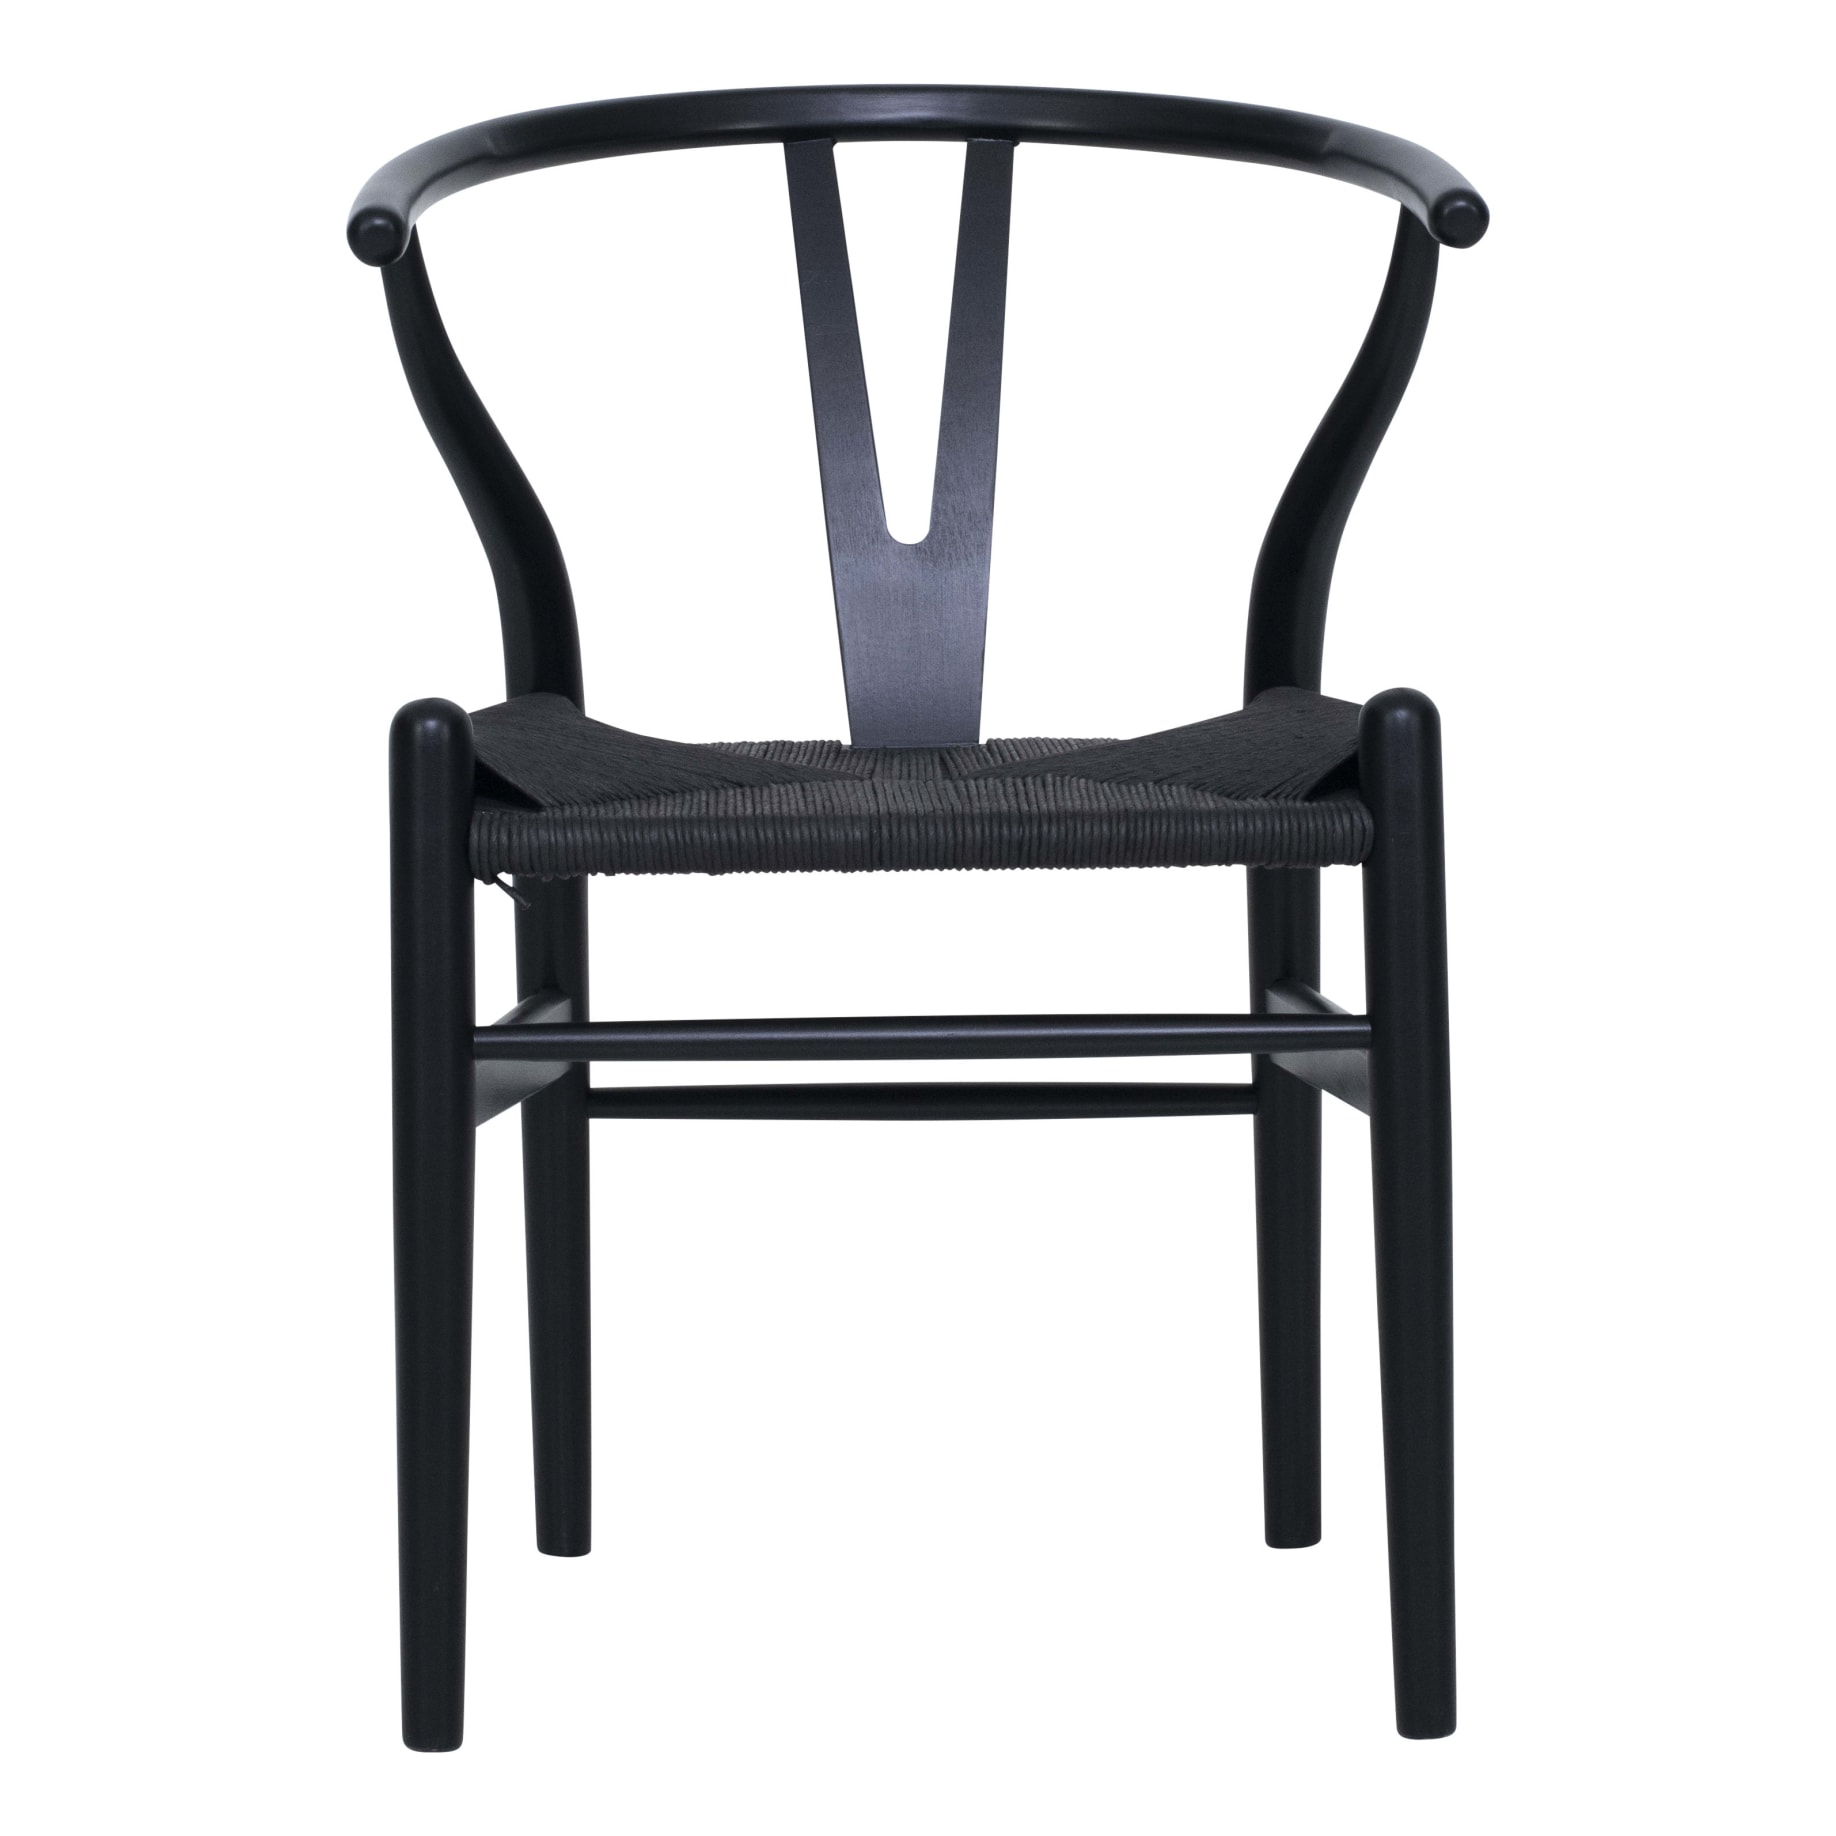 Megs Wishbone Dining Chair in Black / Black Seat